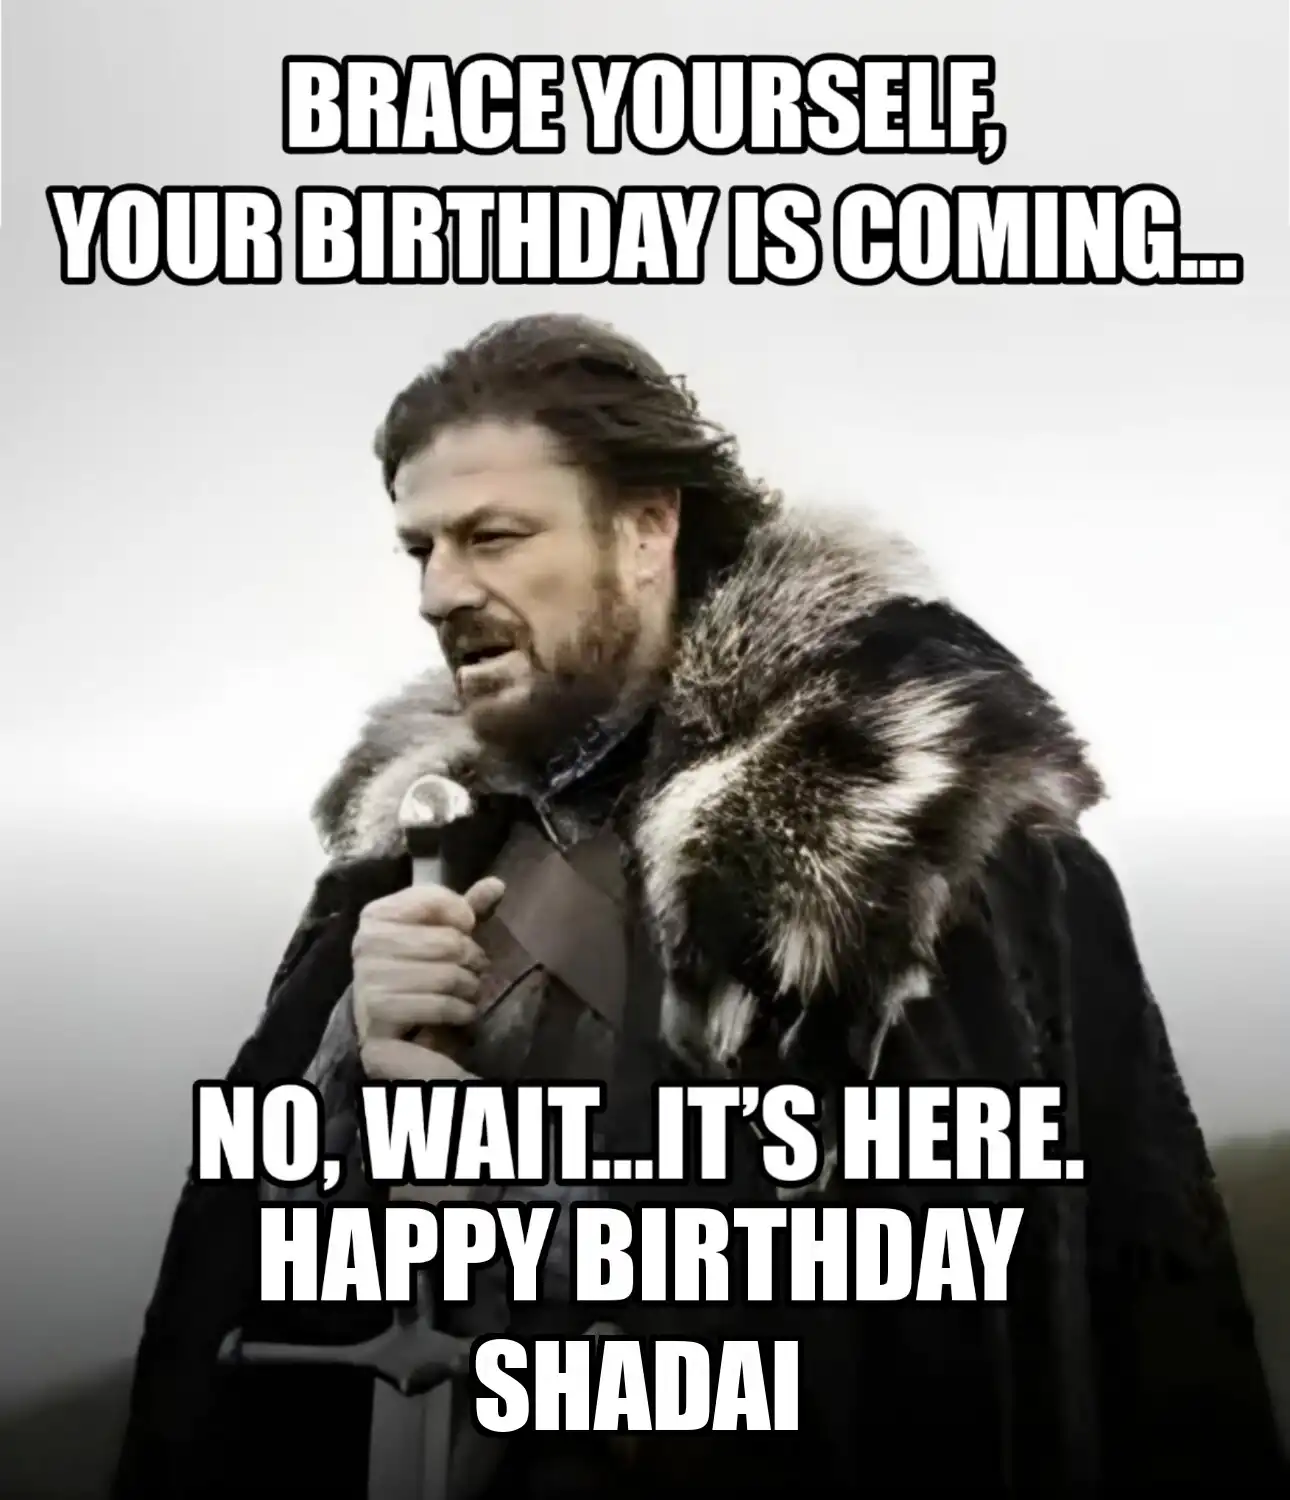 Happy Birthday Shadai Brace Yourself Your Birthday Is Coming Meme